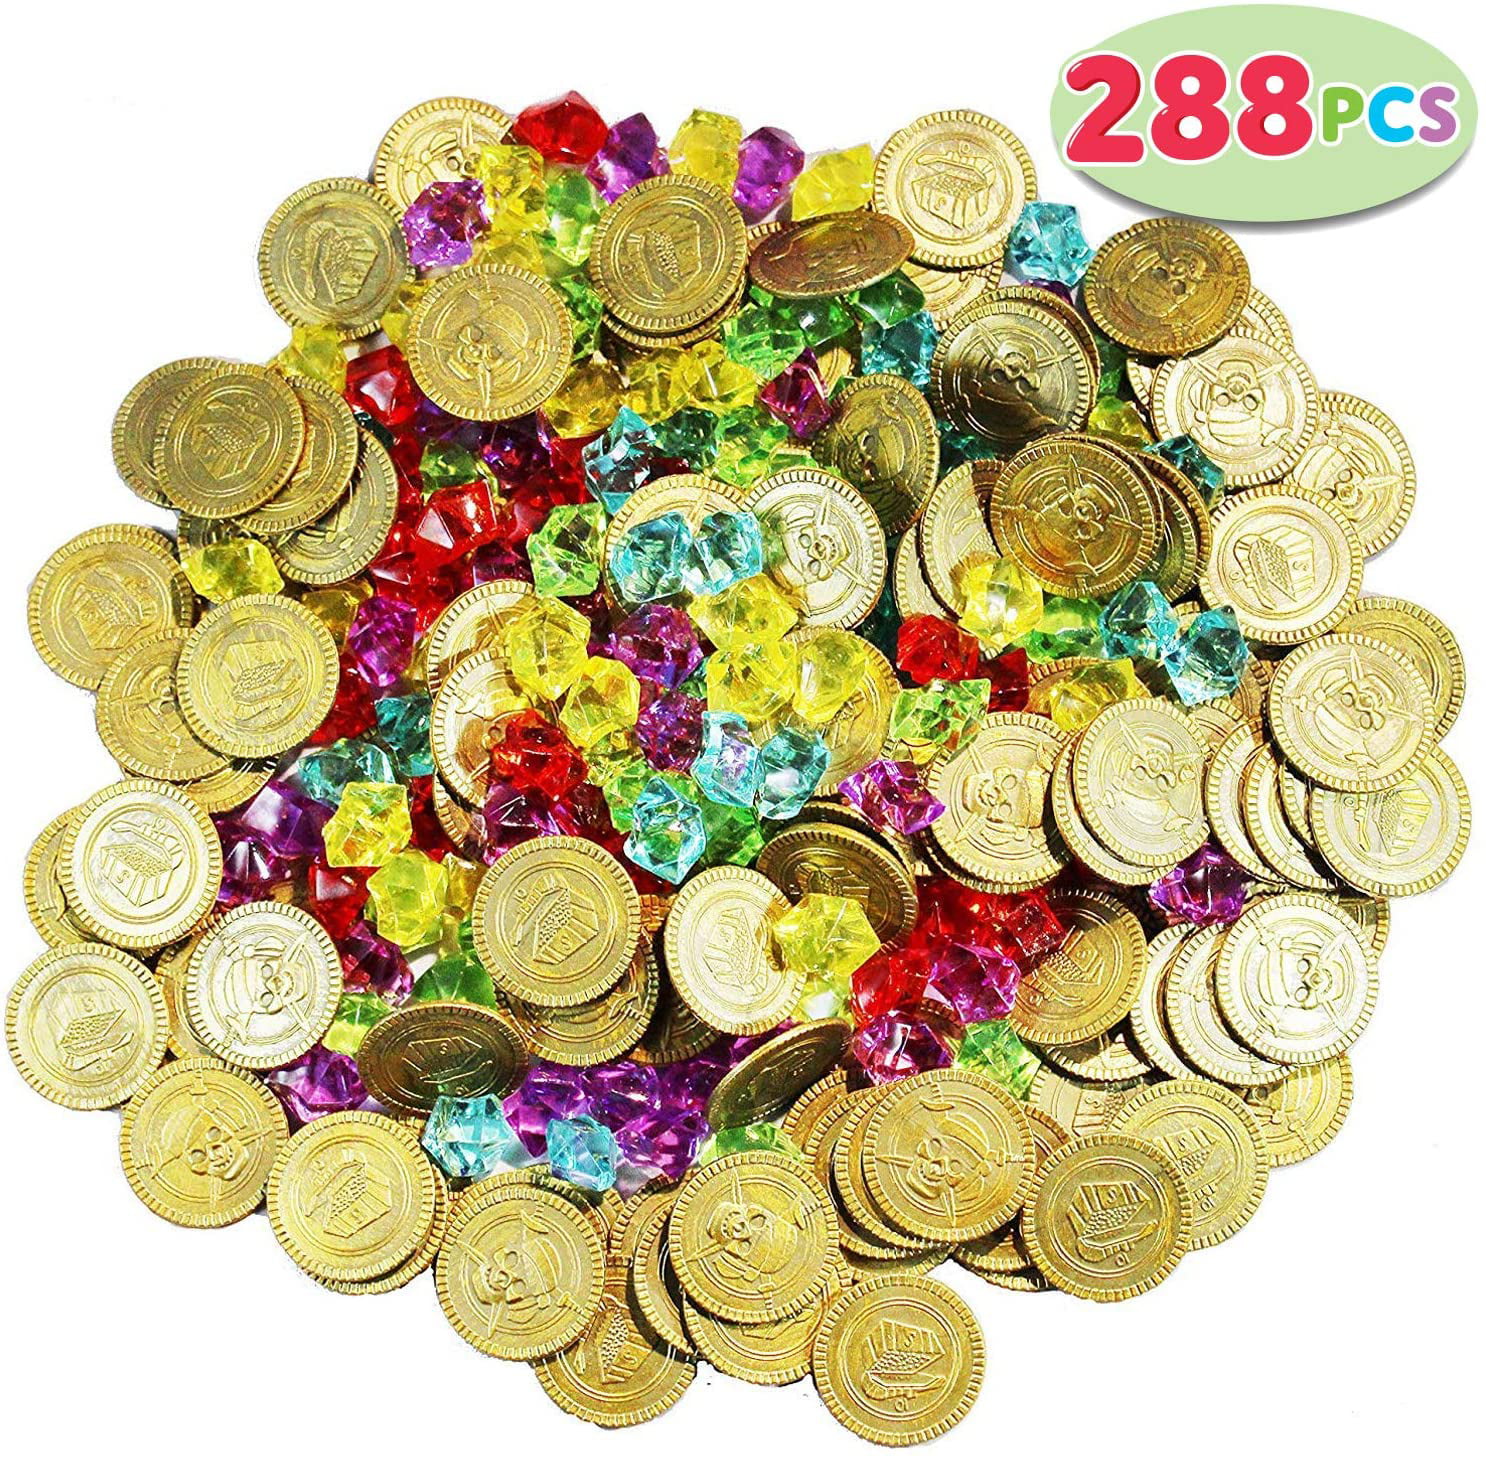 222 pcs Pirate Gems Pirate Gold Coins Fake Treasure Jewels